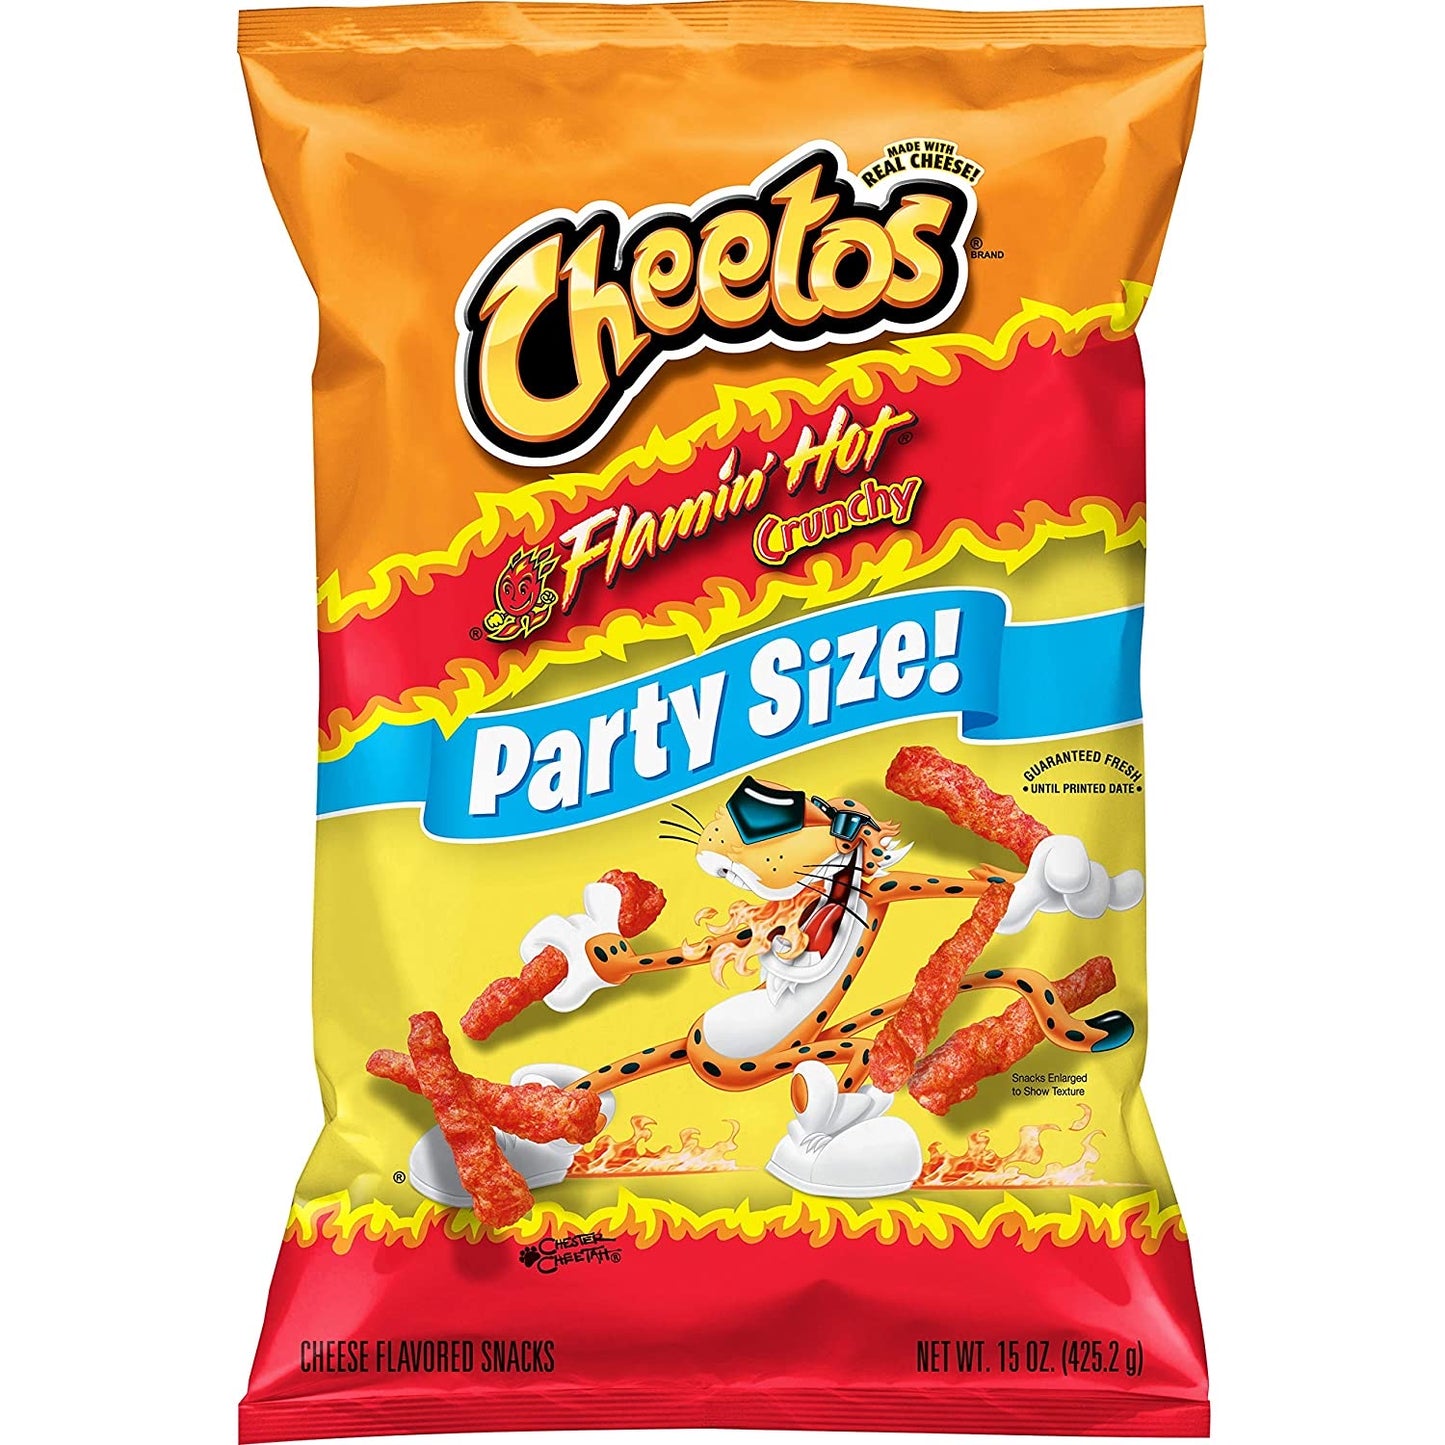 Cheetos Flamin Hot Party Size - 15oz (425.2g)